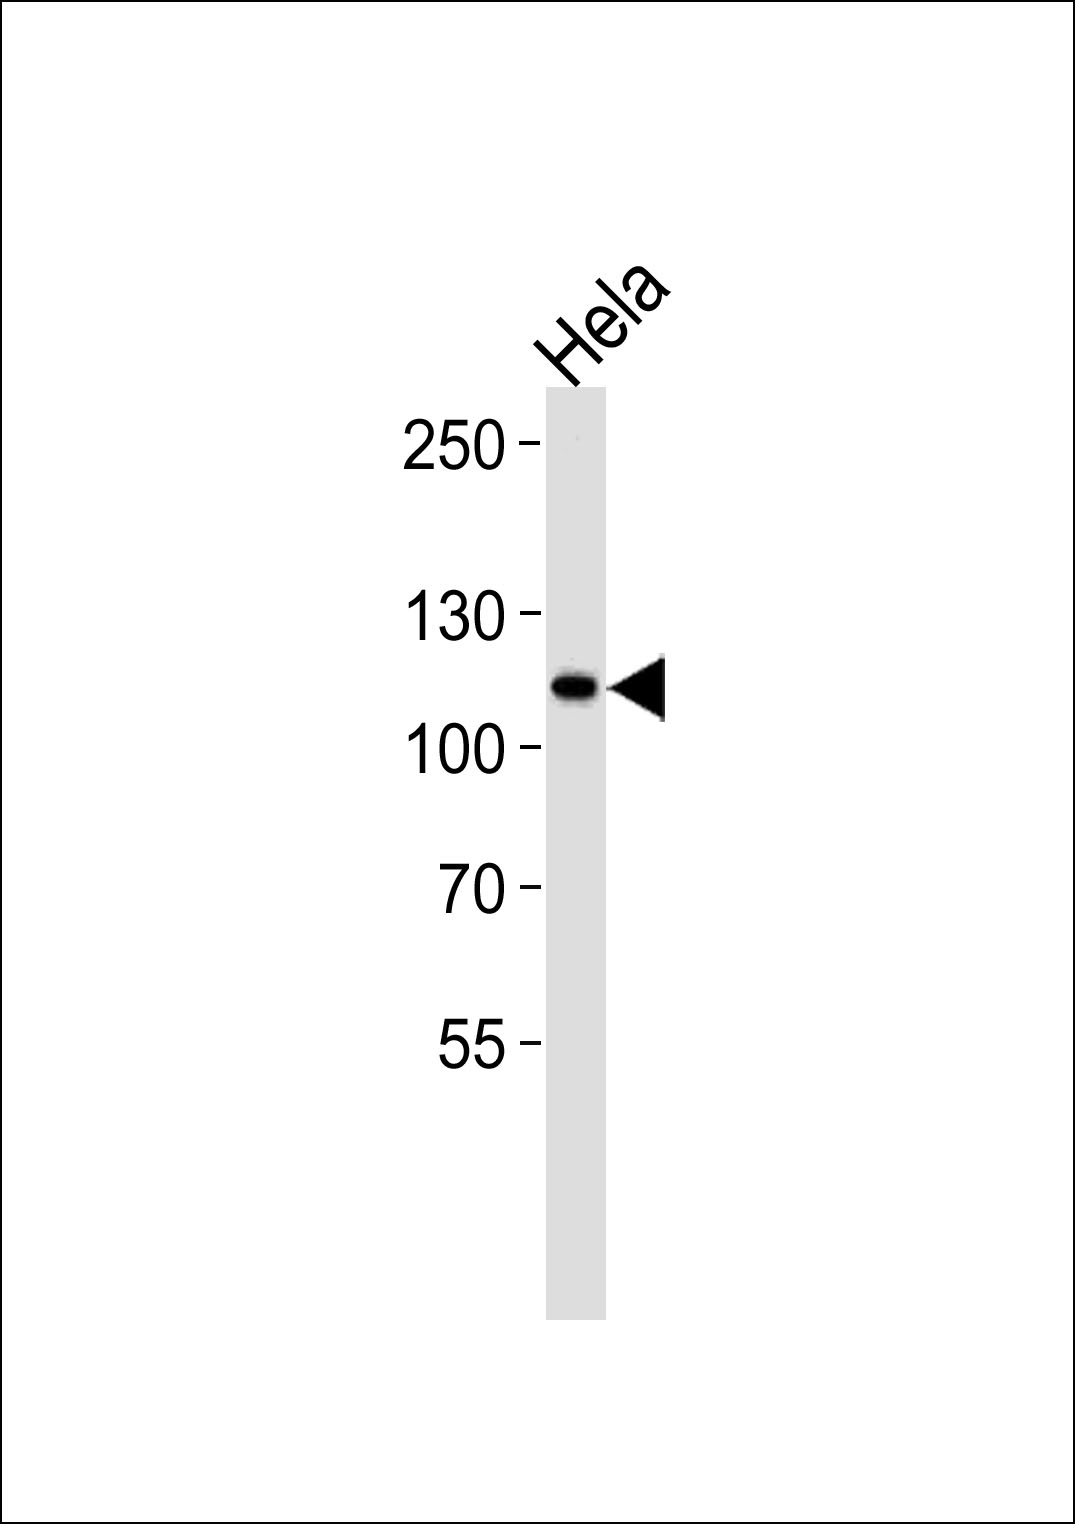 WB - HK2 (Hexokinase II) Antibody (N-term) AP8140a